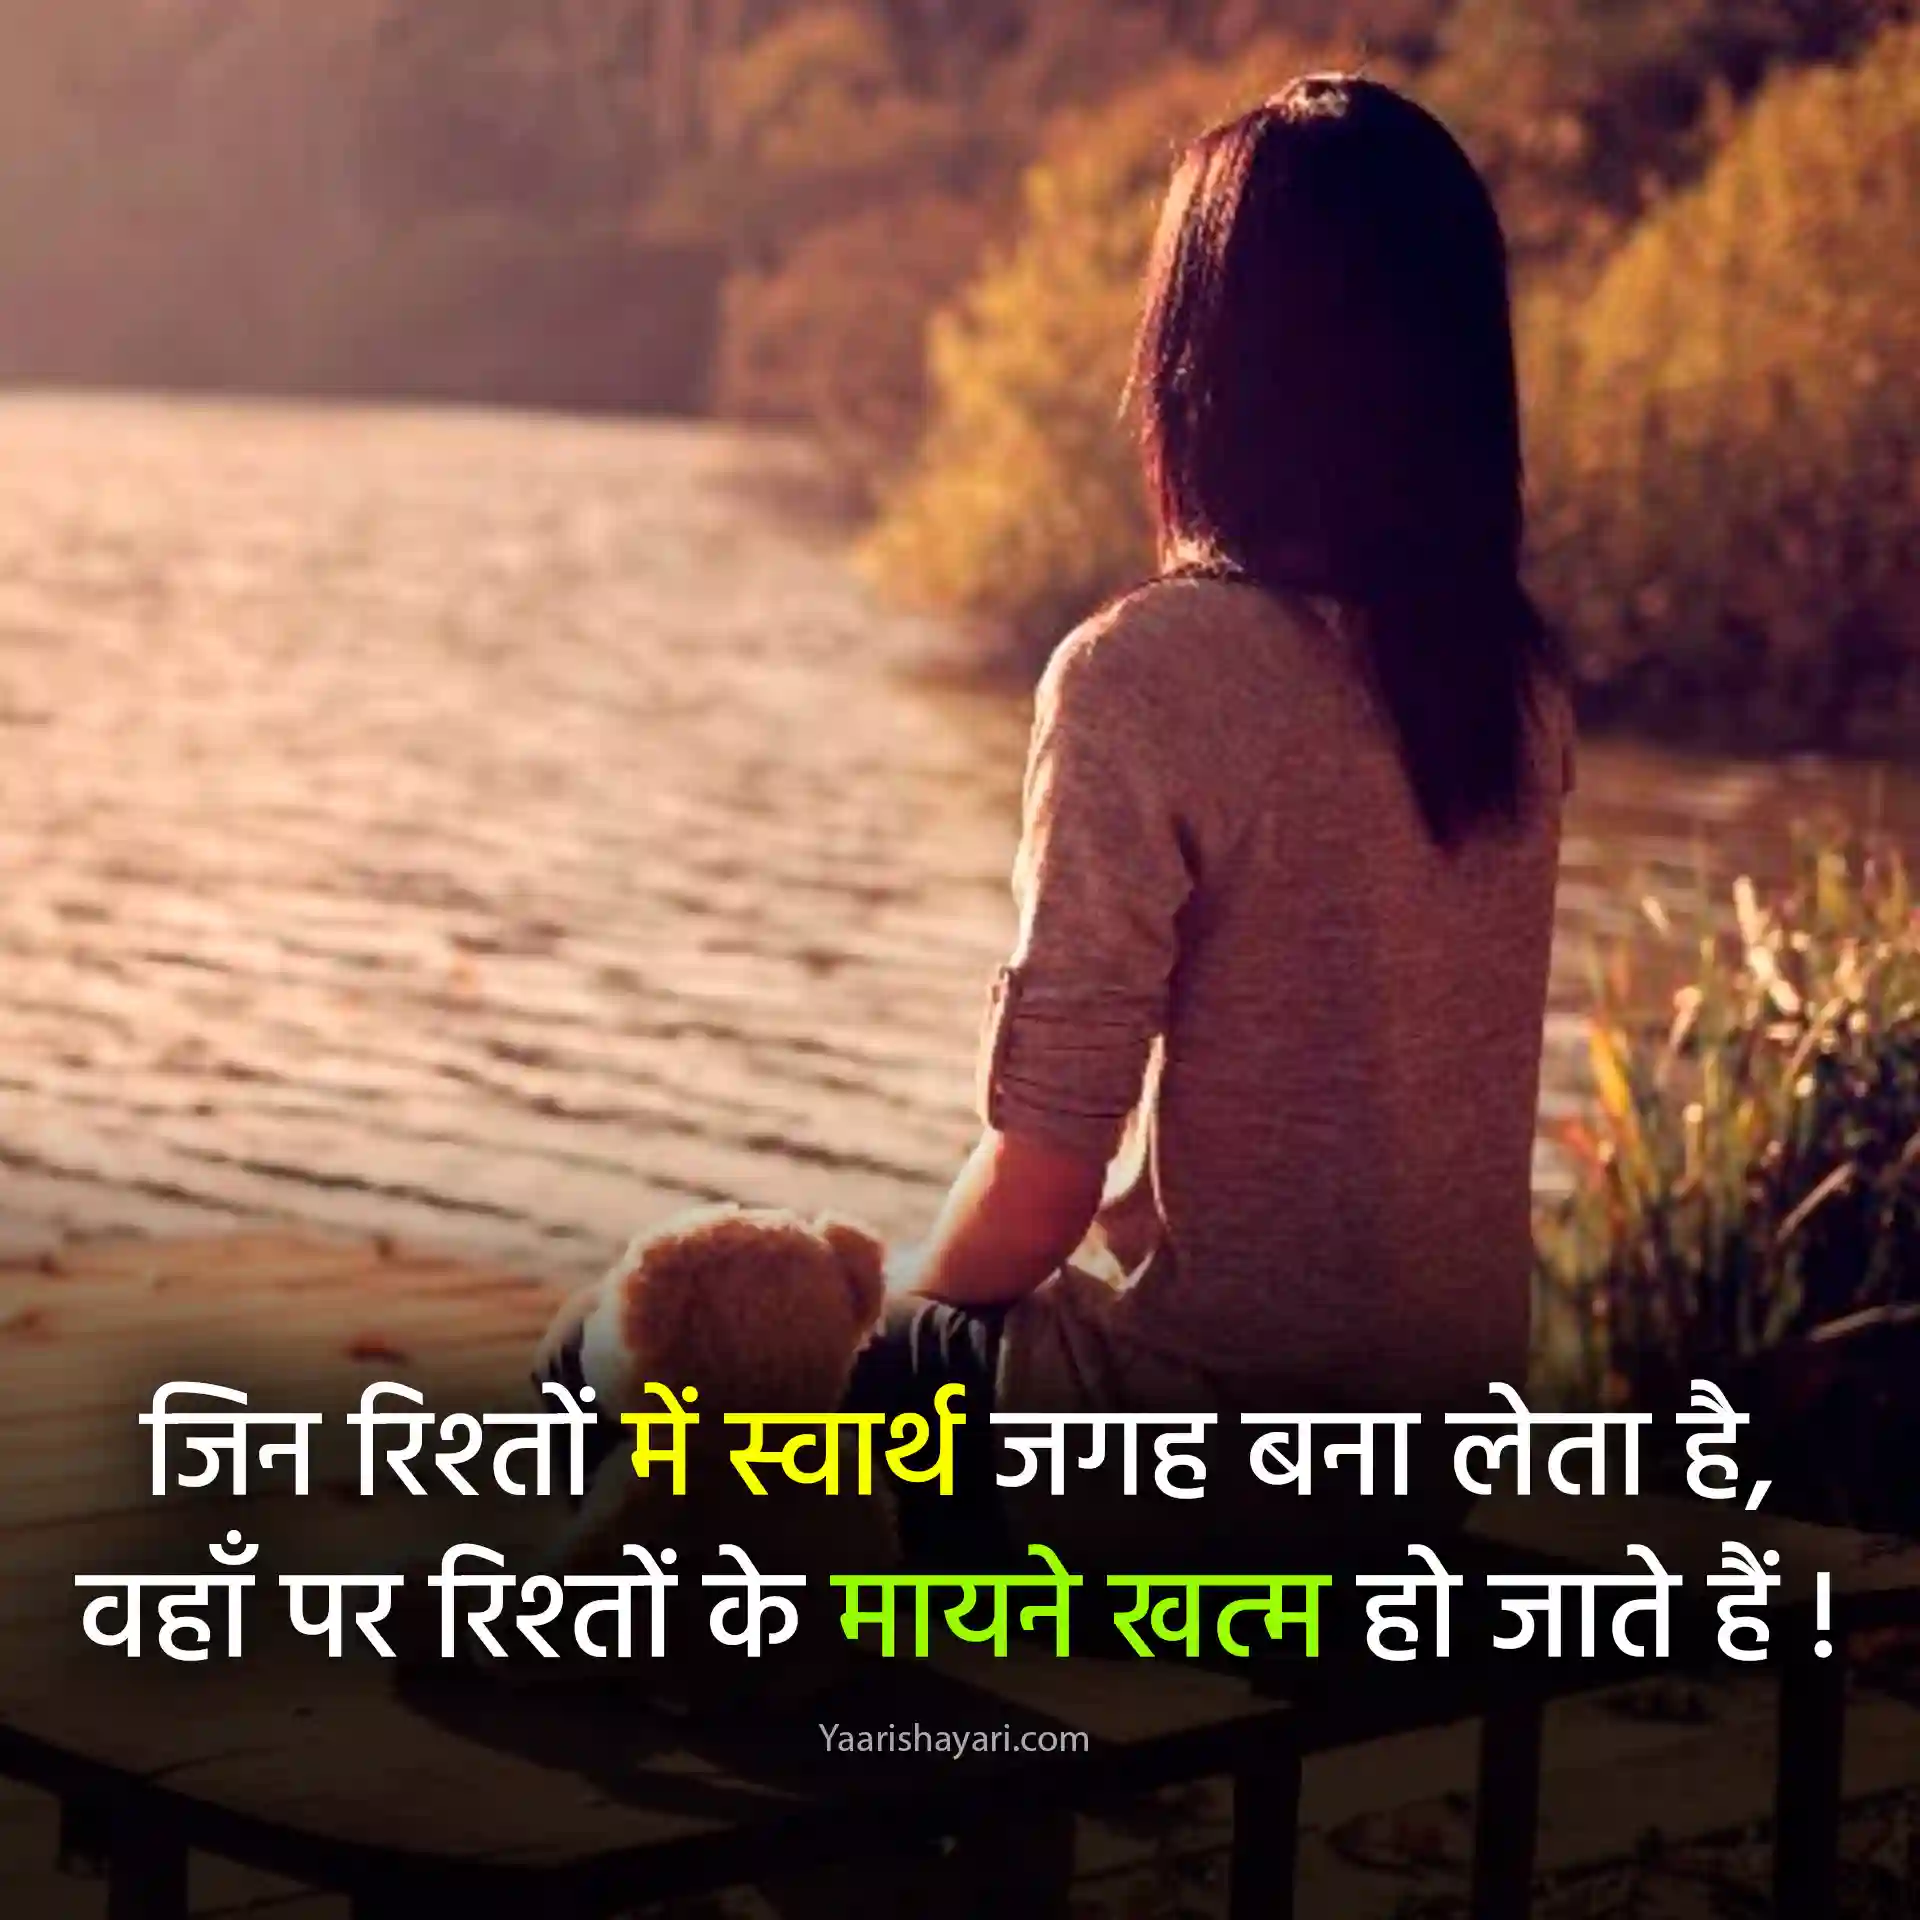 Selfish Family Quotes in Hindi Image